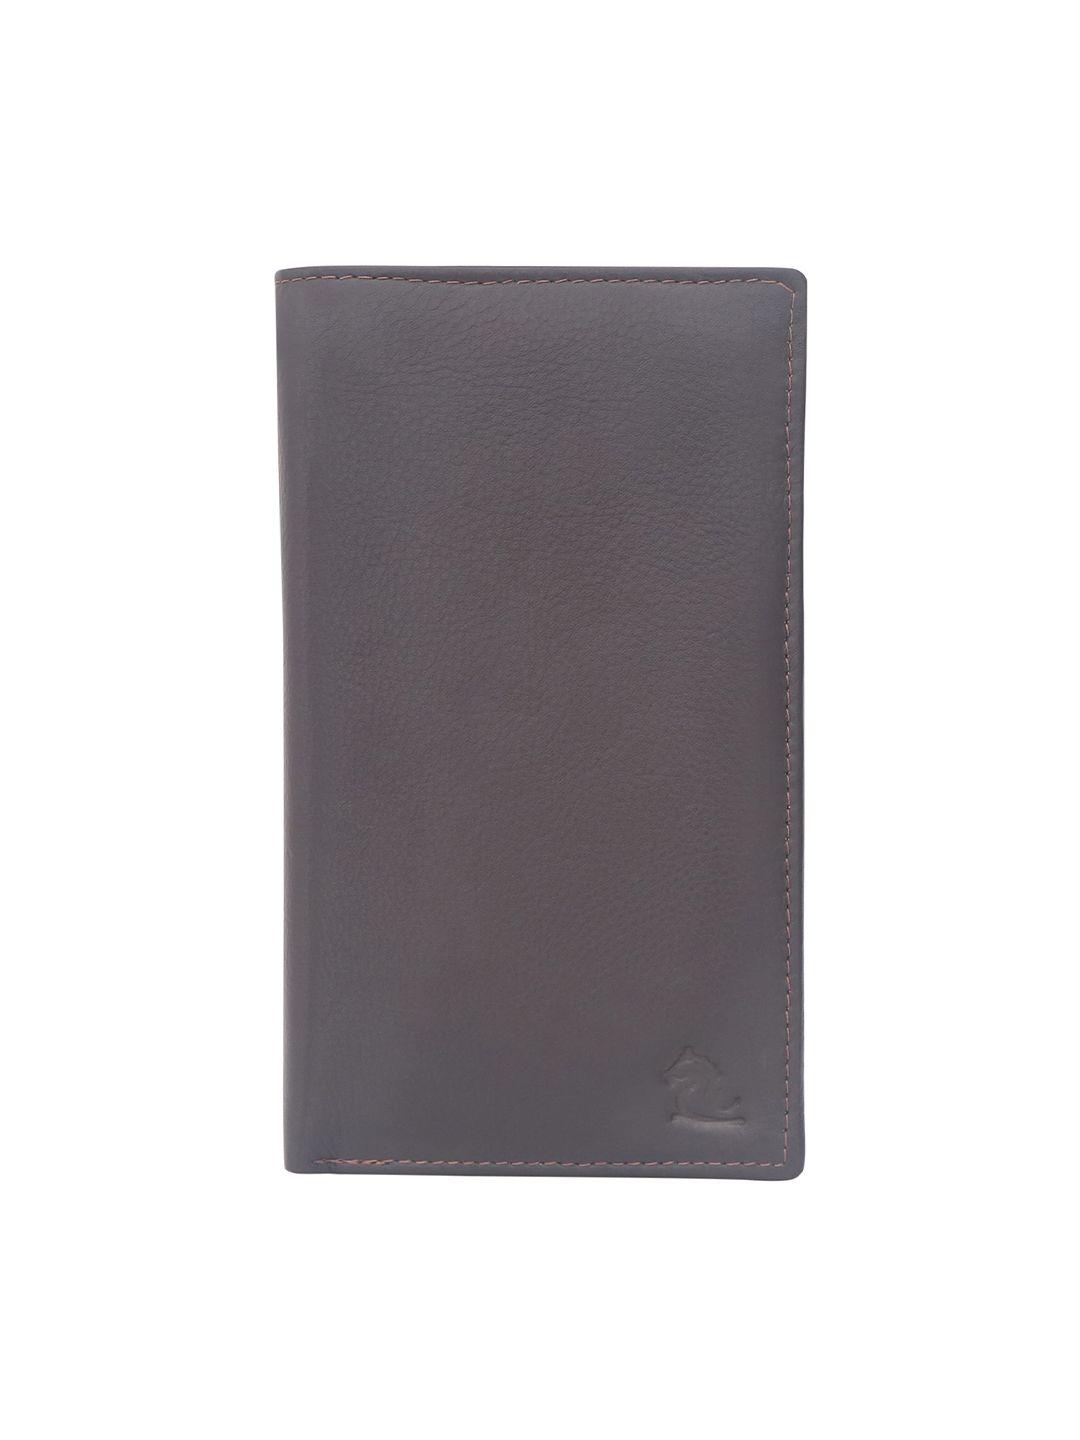 kara unisex leather long two fold wallet